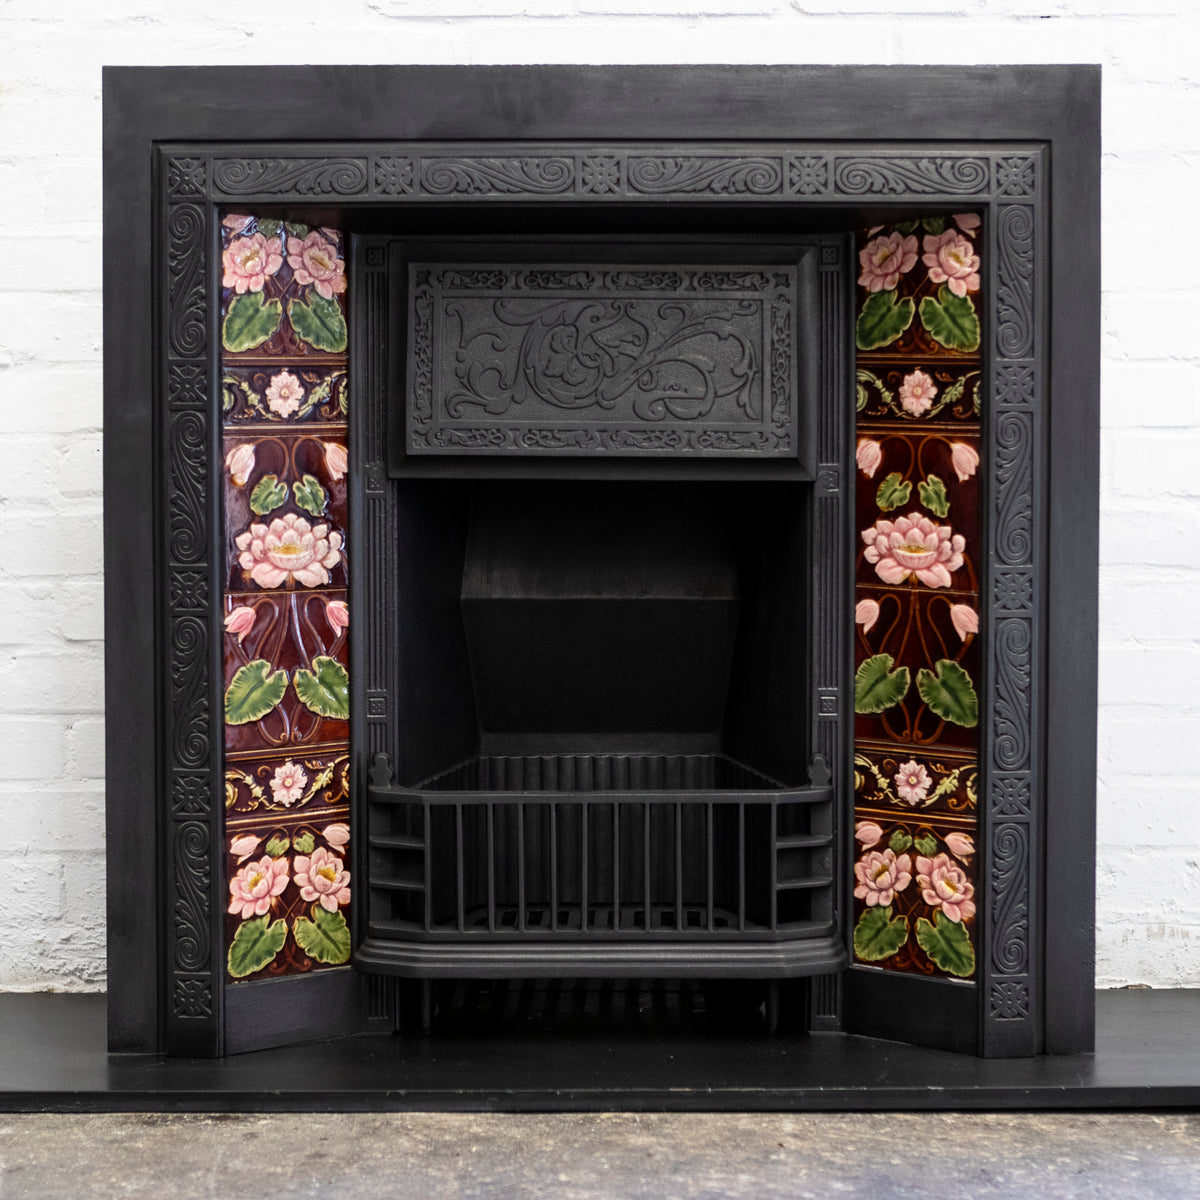 Cast Iron Fireplace Insert with Original Art Nouveau Tiles | The Architectural Forum